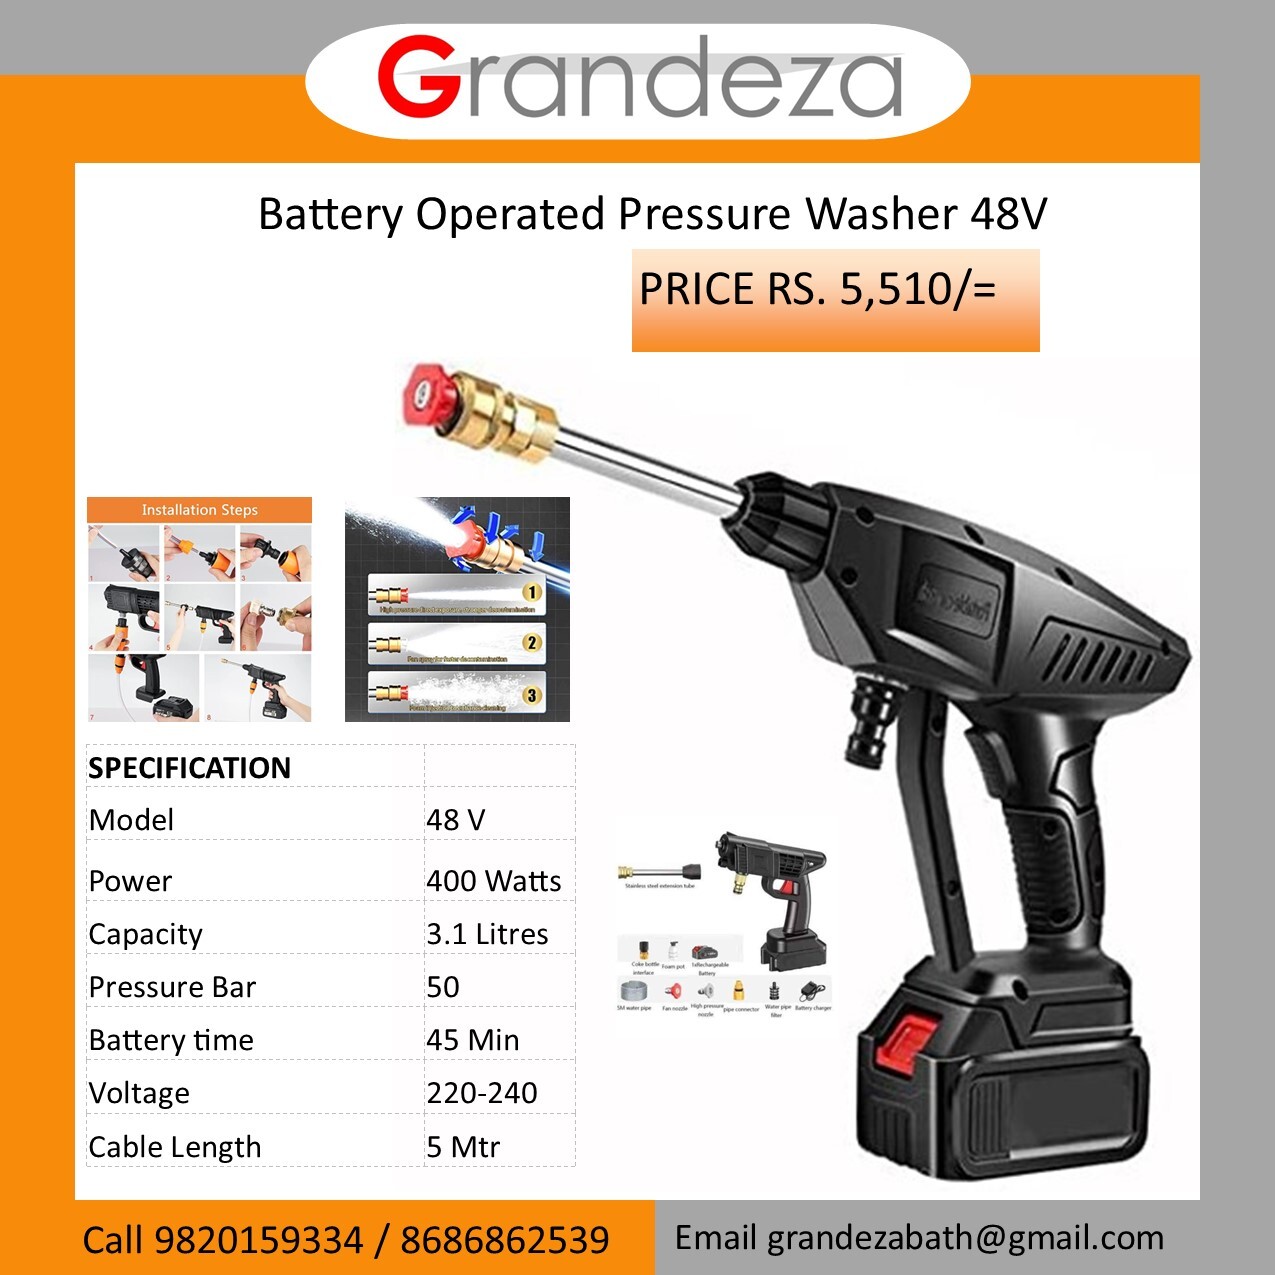 GRANDEZA Battery Operated Pressure Washer 48V